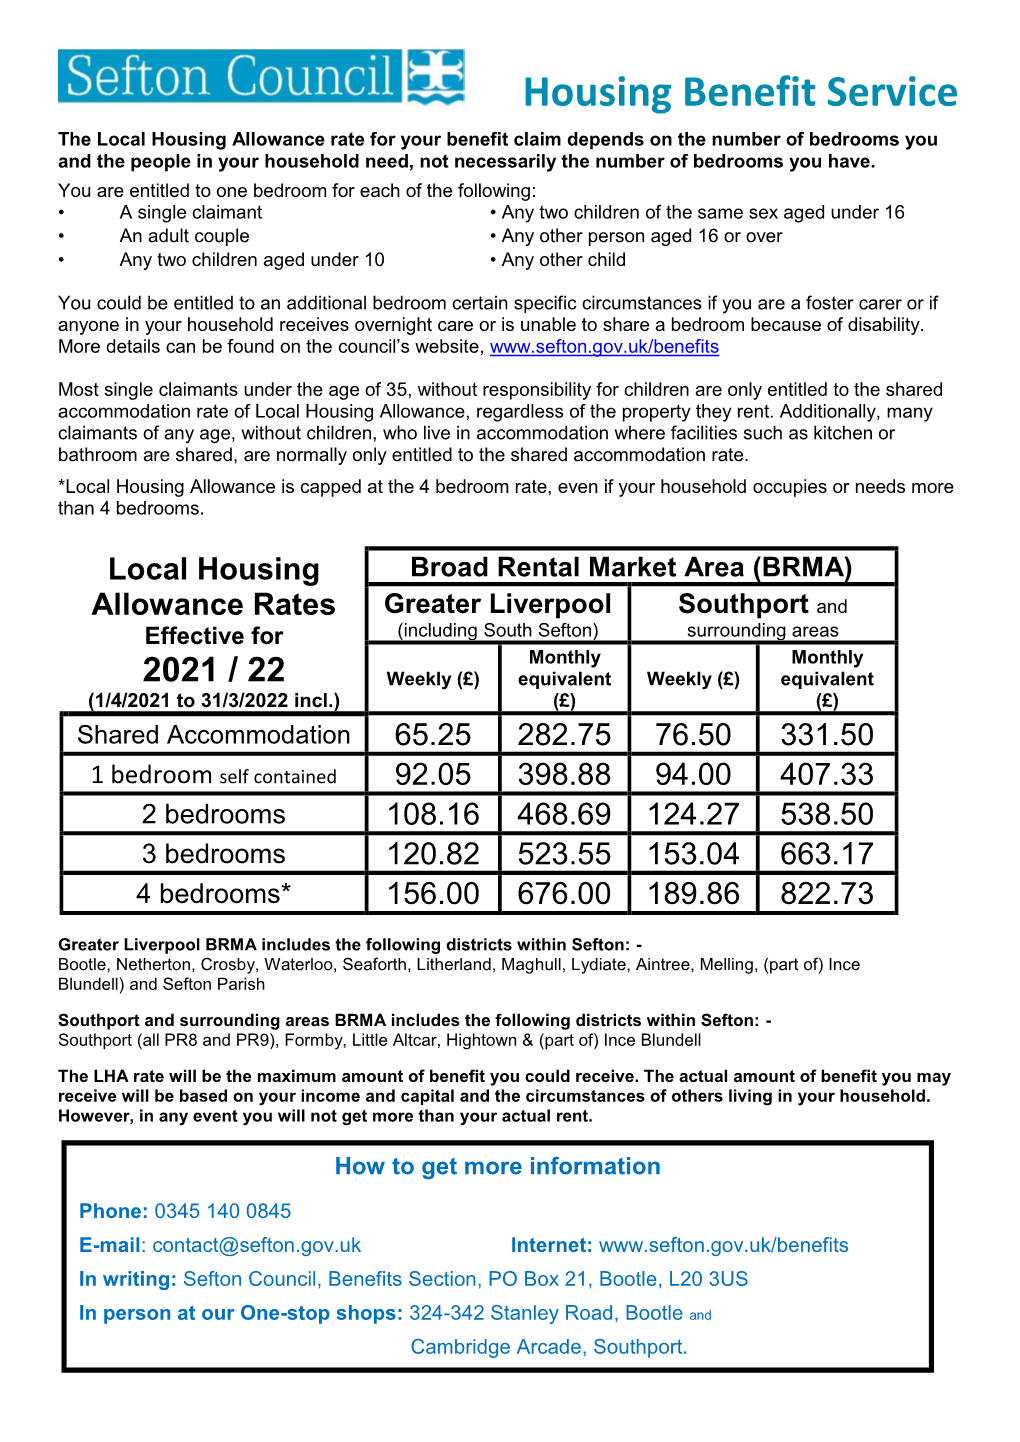 Local Housing Allowance Rates 2021-22